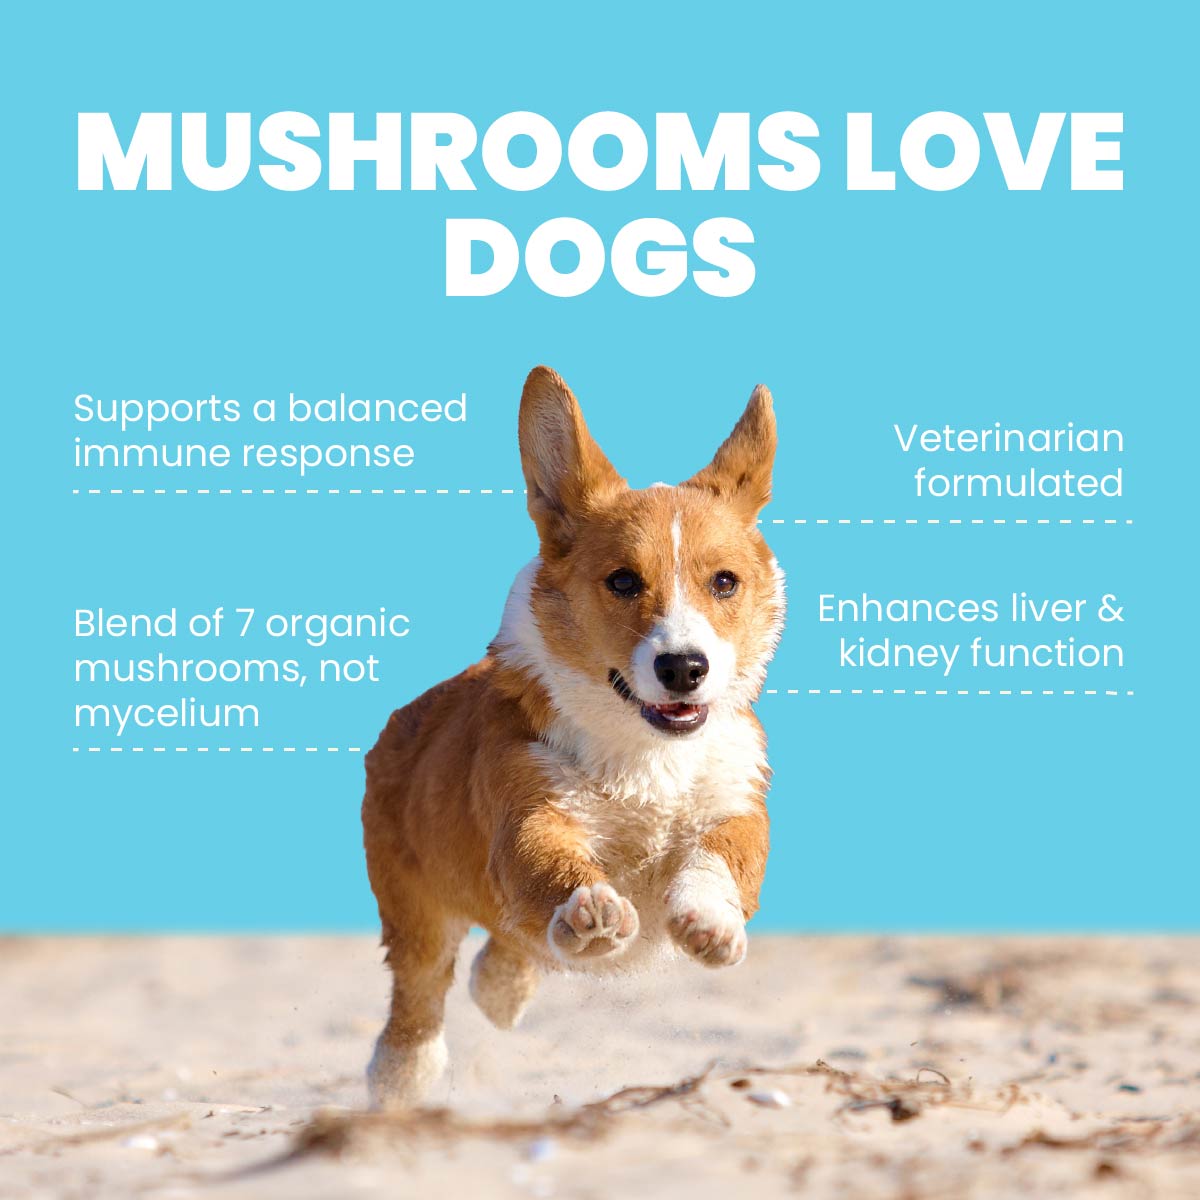 Four Leaf Rover Seven 'Shrooms - Organic Mushroom Mix